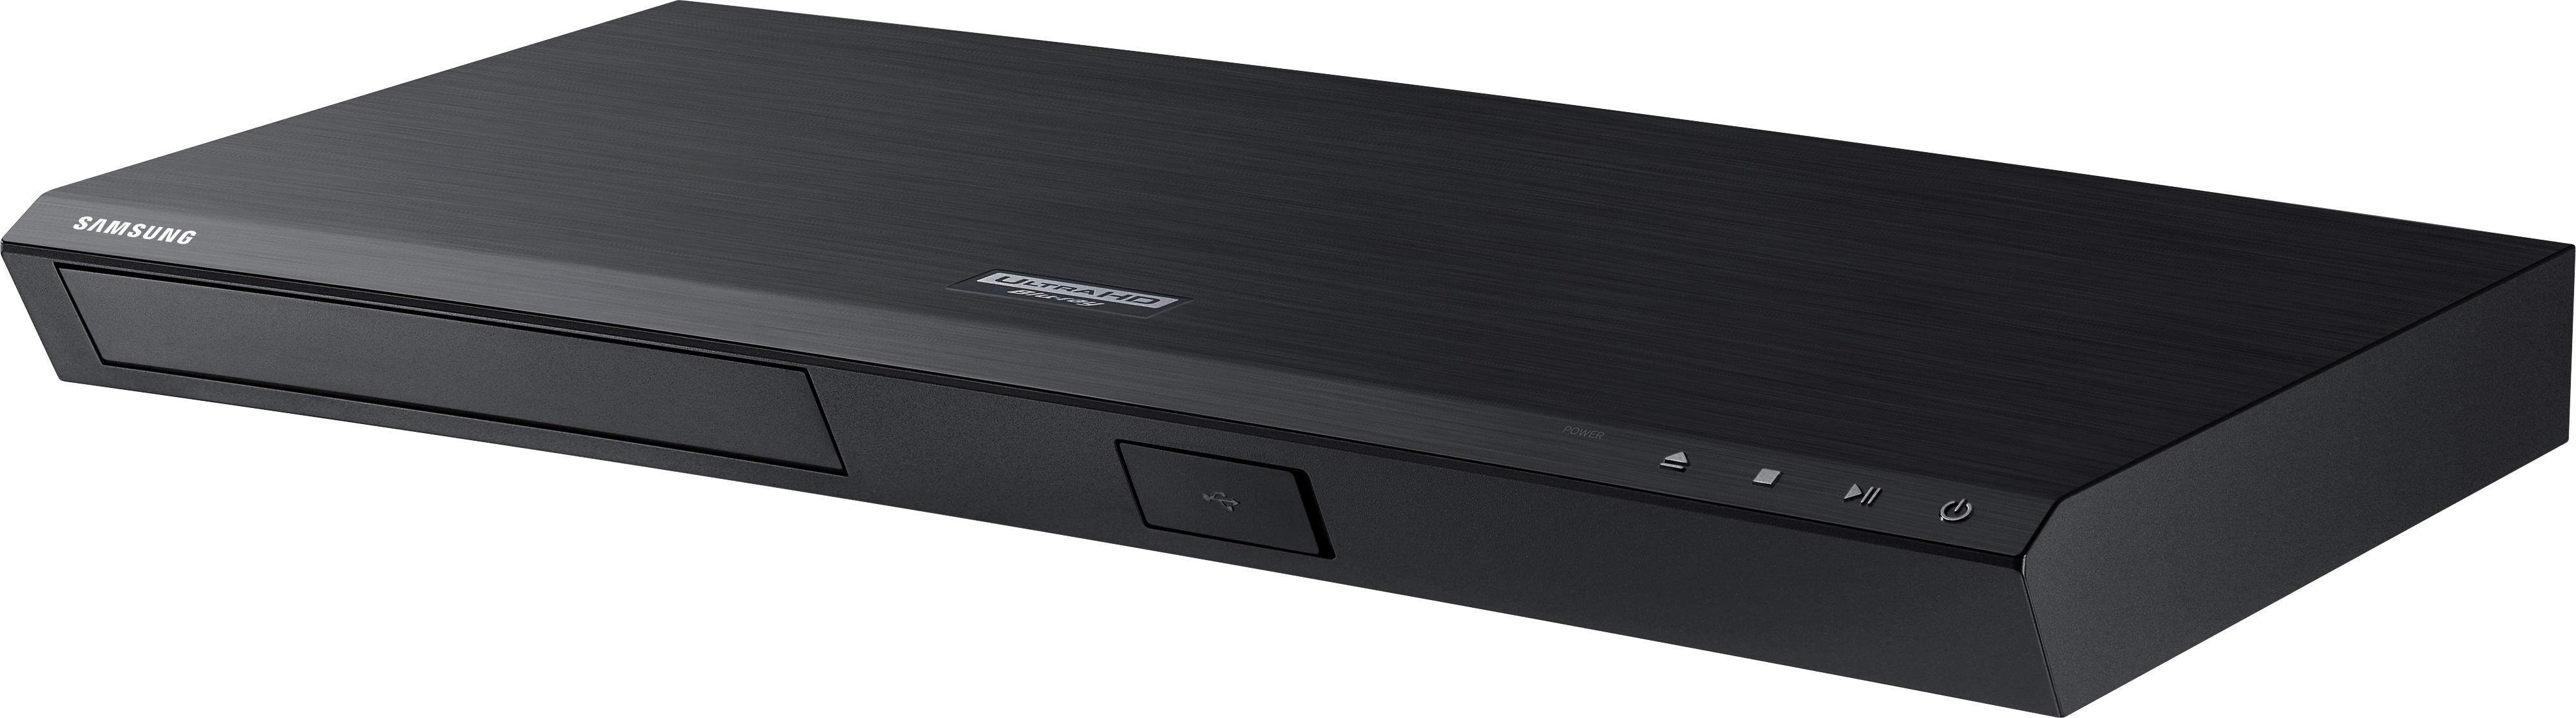 Samsung Streaming 4k Ultra Hd Audio Wi Fi Built In Blu Ray Player Black Ubd M8500 Za Best Buy